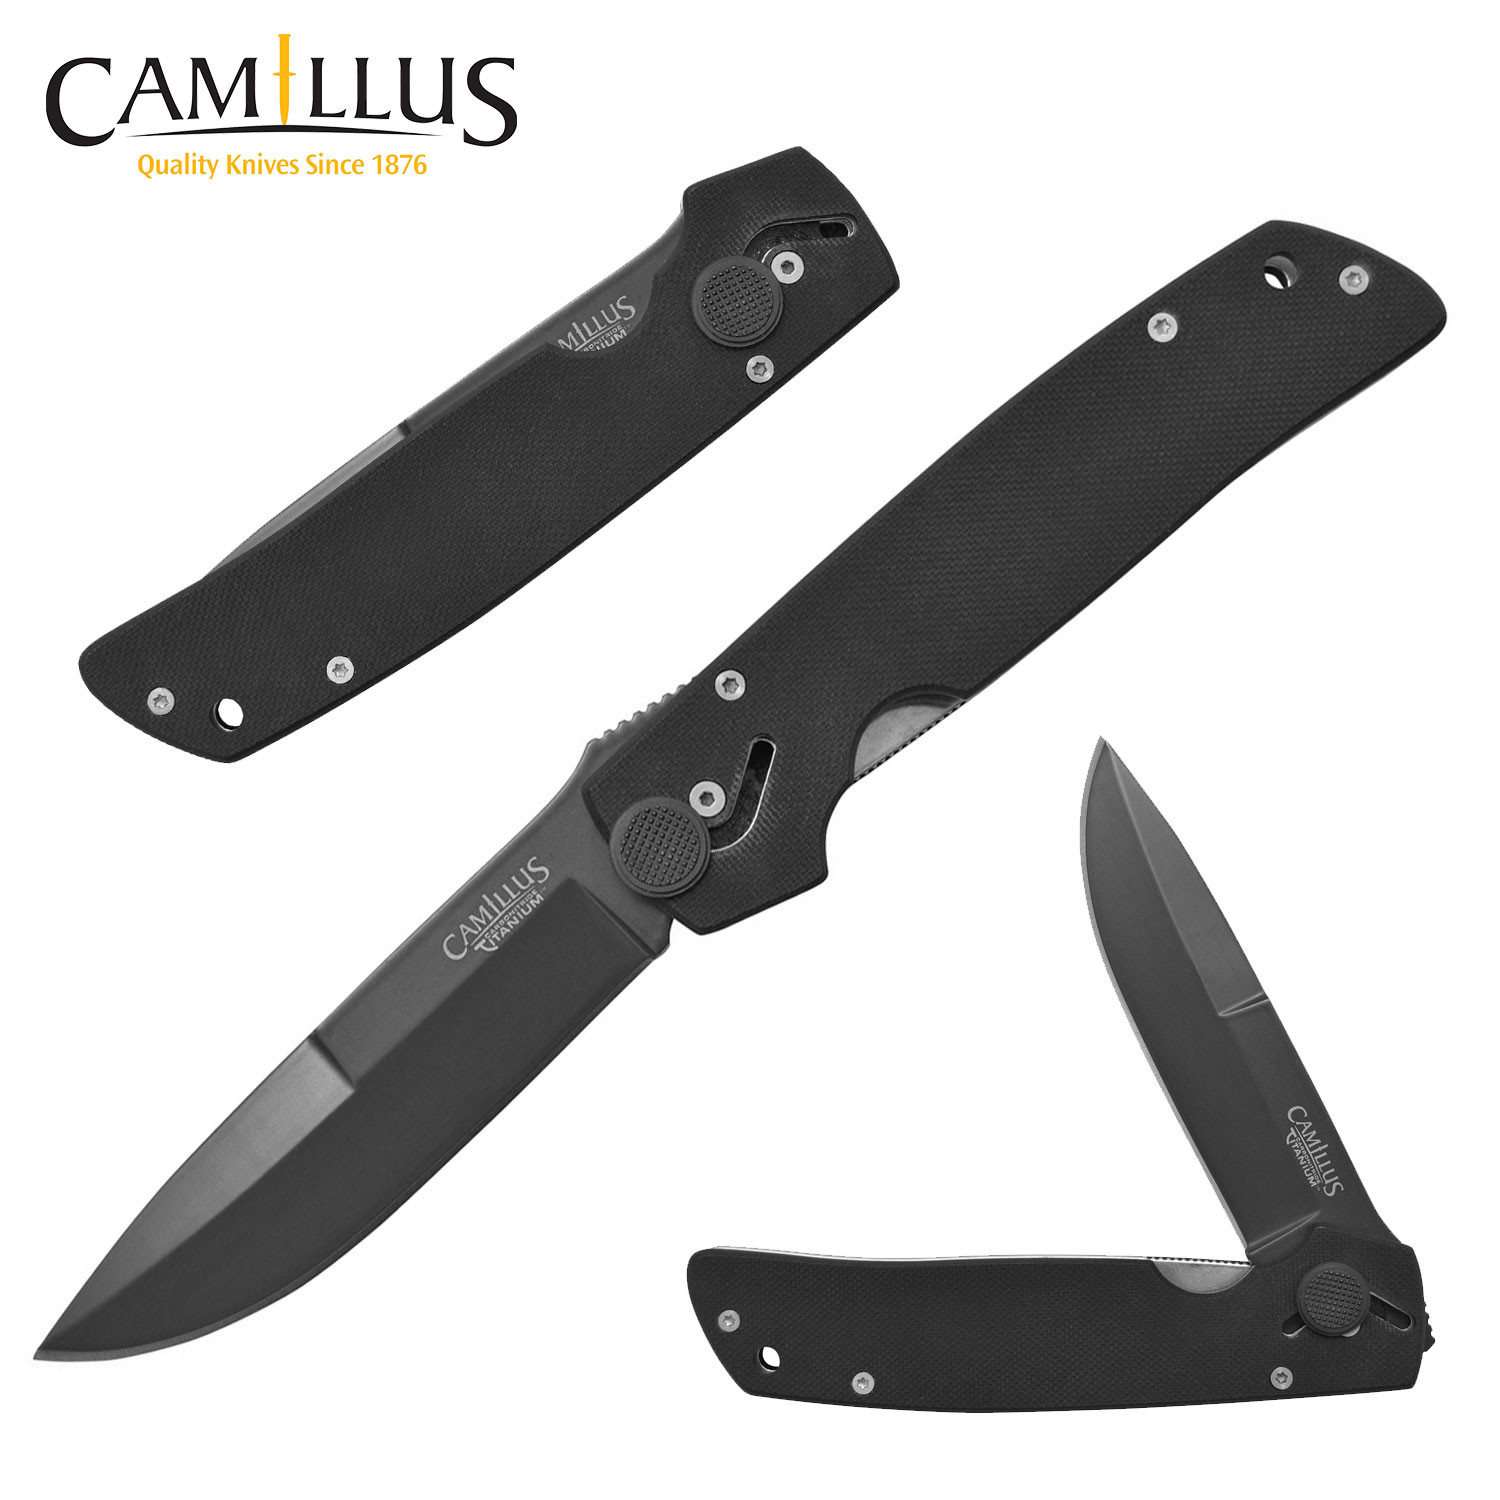 9" Camillus CUDA Carbonitride Titanium Folding Knife $18.99 + Free Shipping